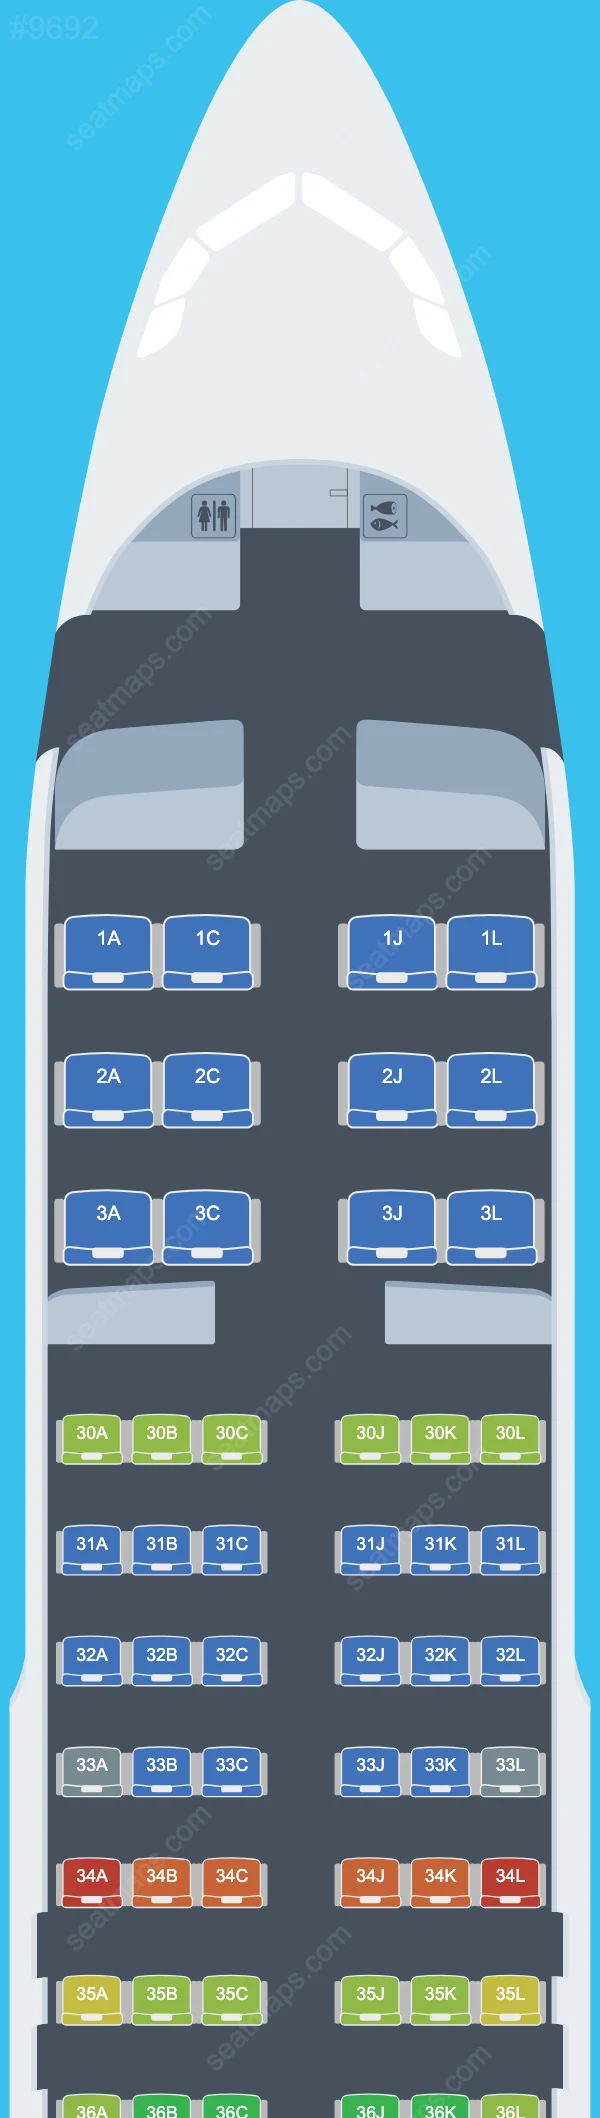 Saudia Airbus A320 Seat Maps A320-200